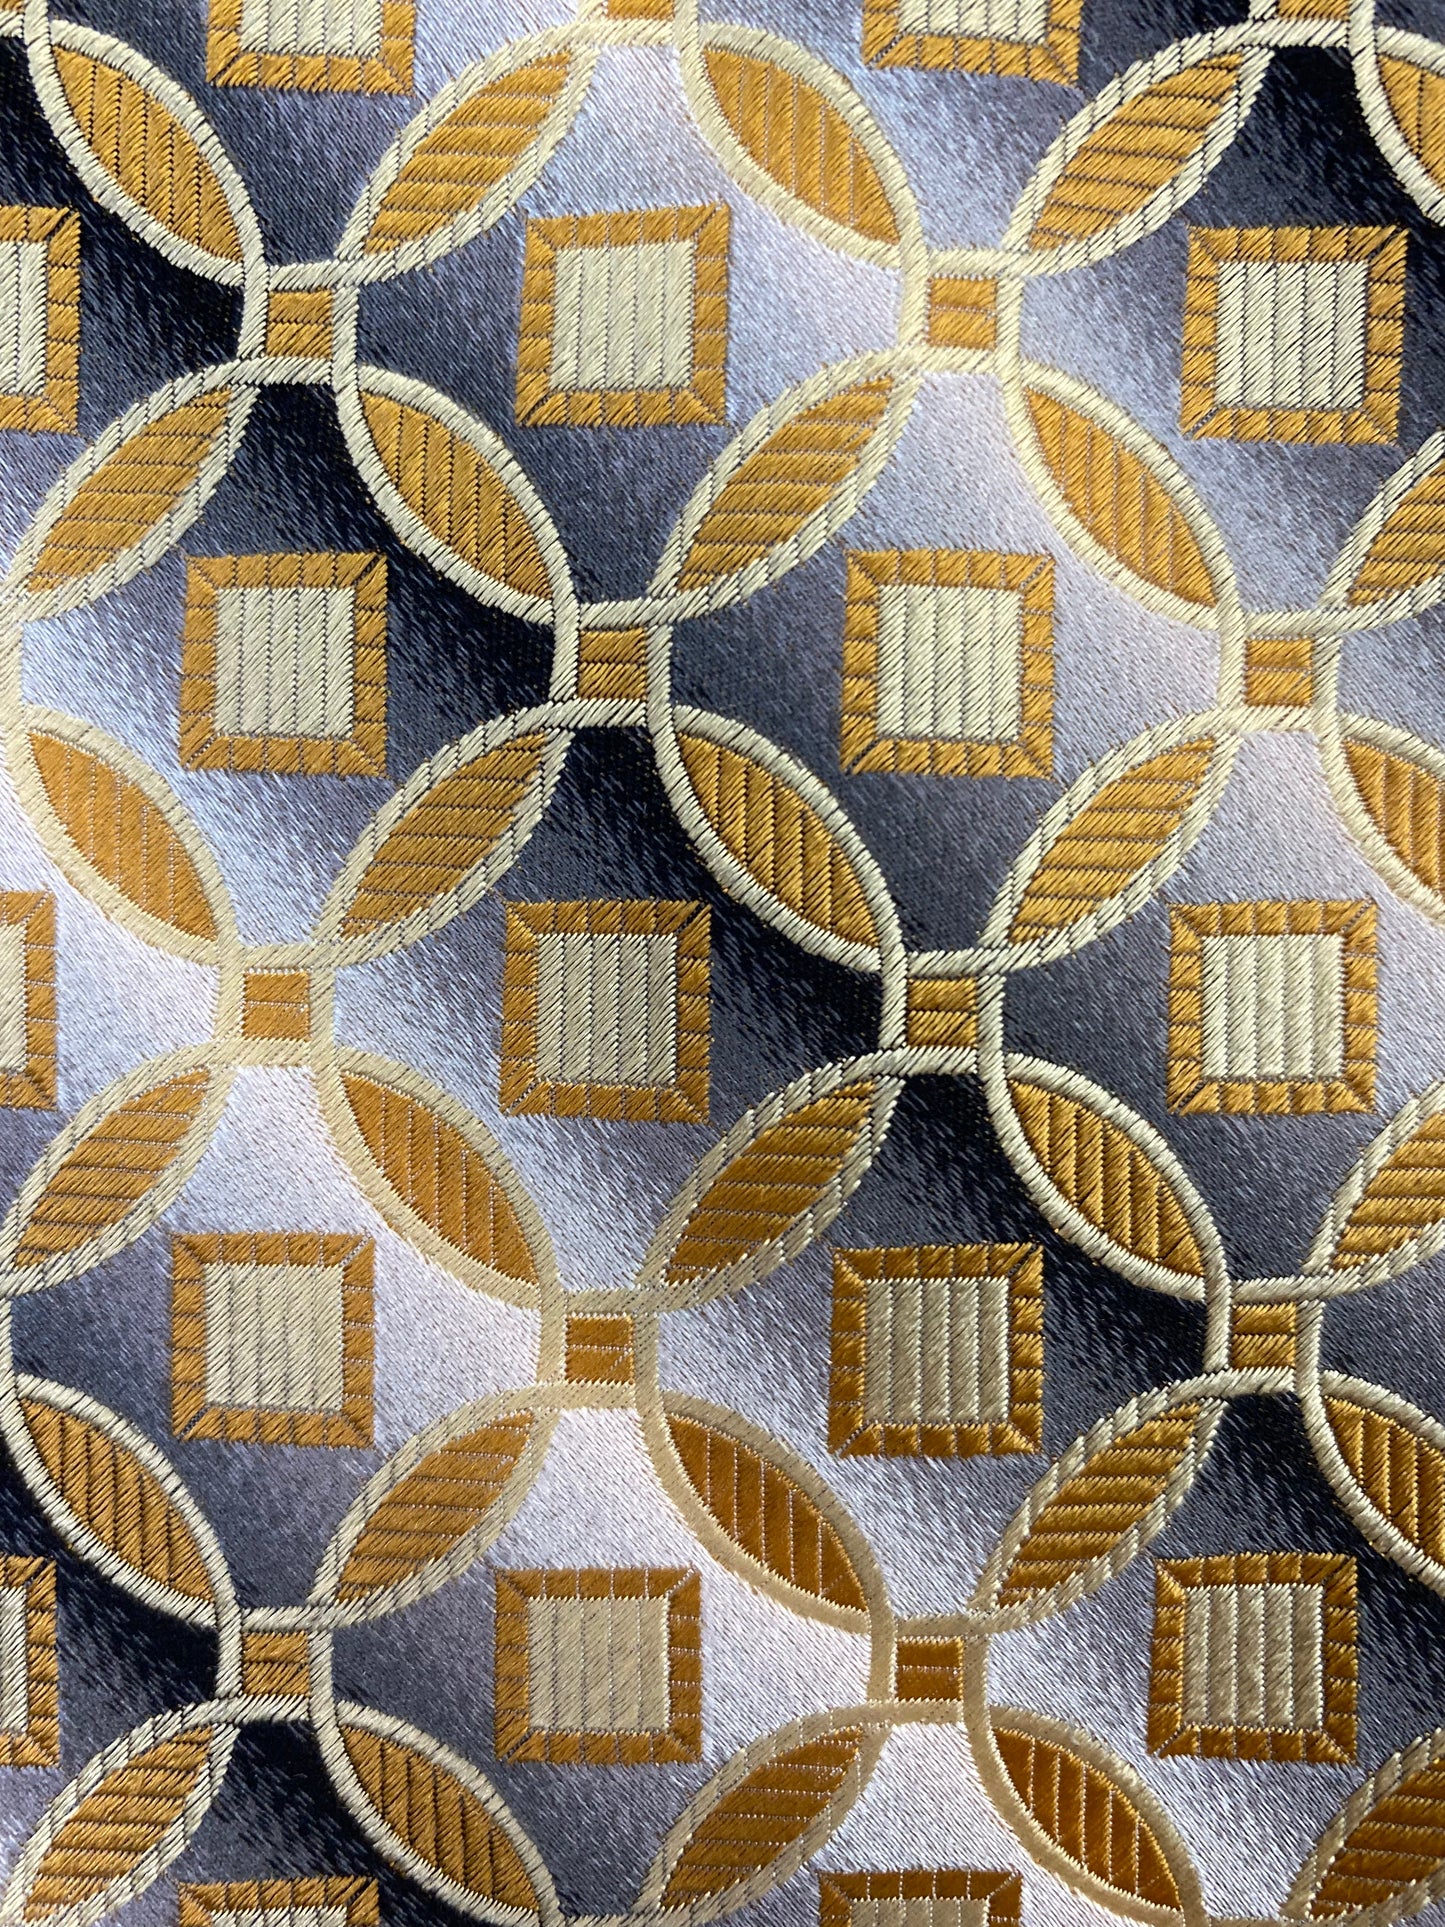 Close-up detail of pattern: 90s Deadstock Silk Necktie, Men's Vintage Gold Grey Medallion With Diagonal Stripe Pattern Tie, NOS